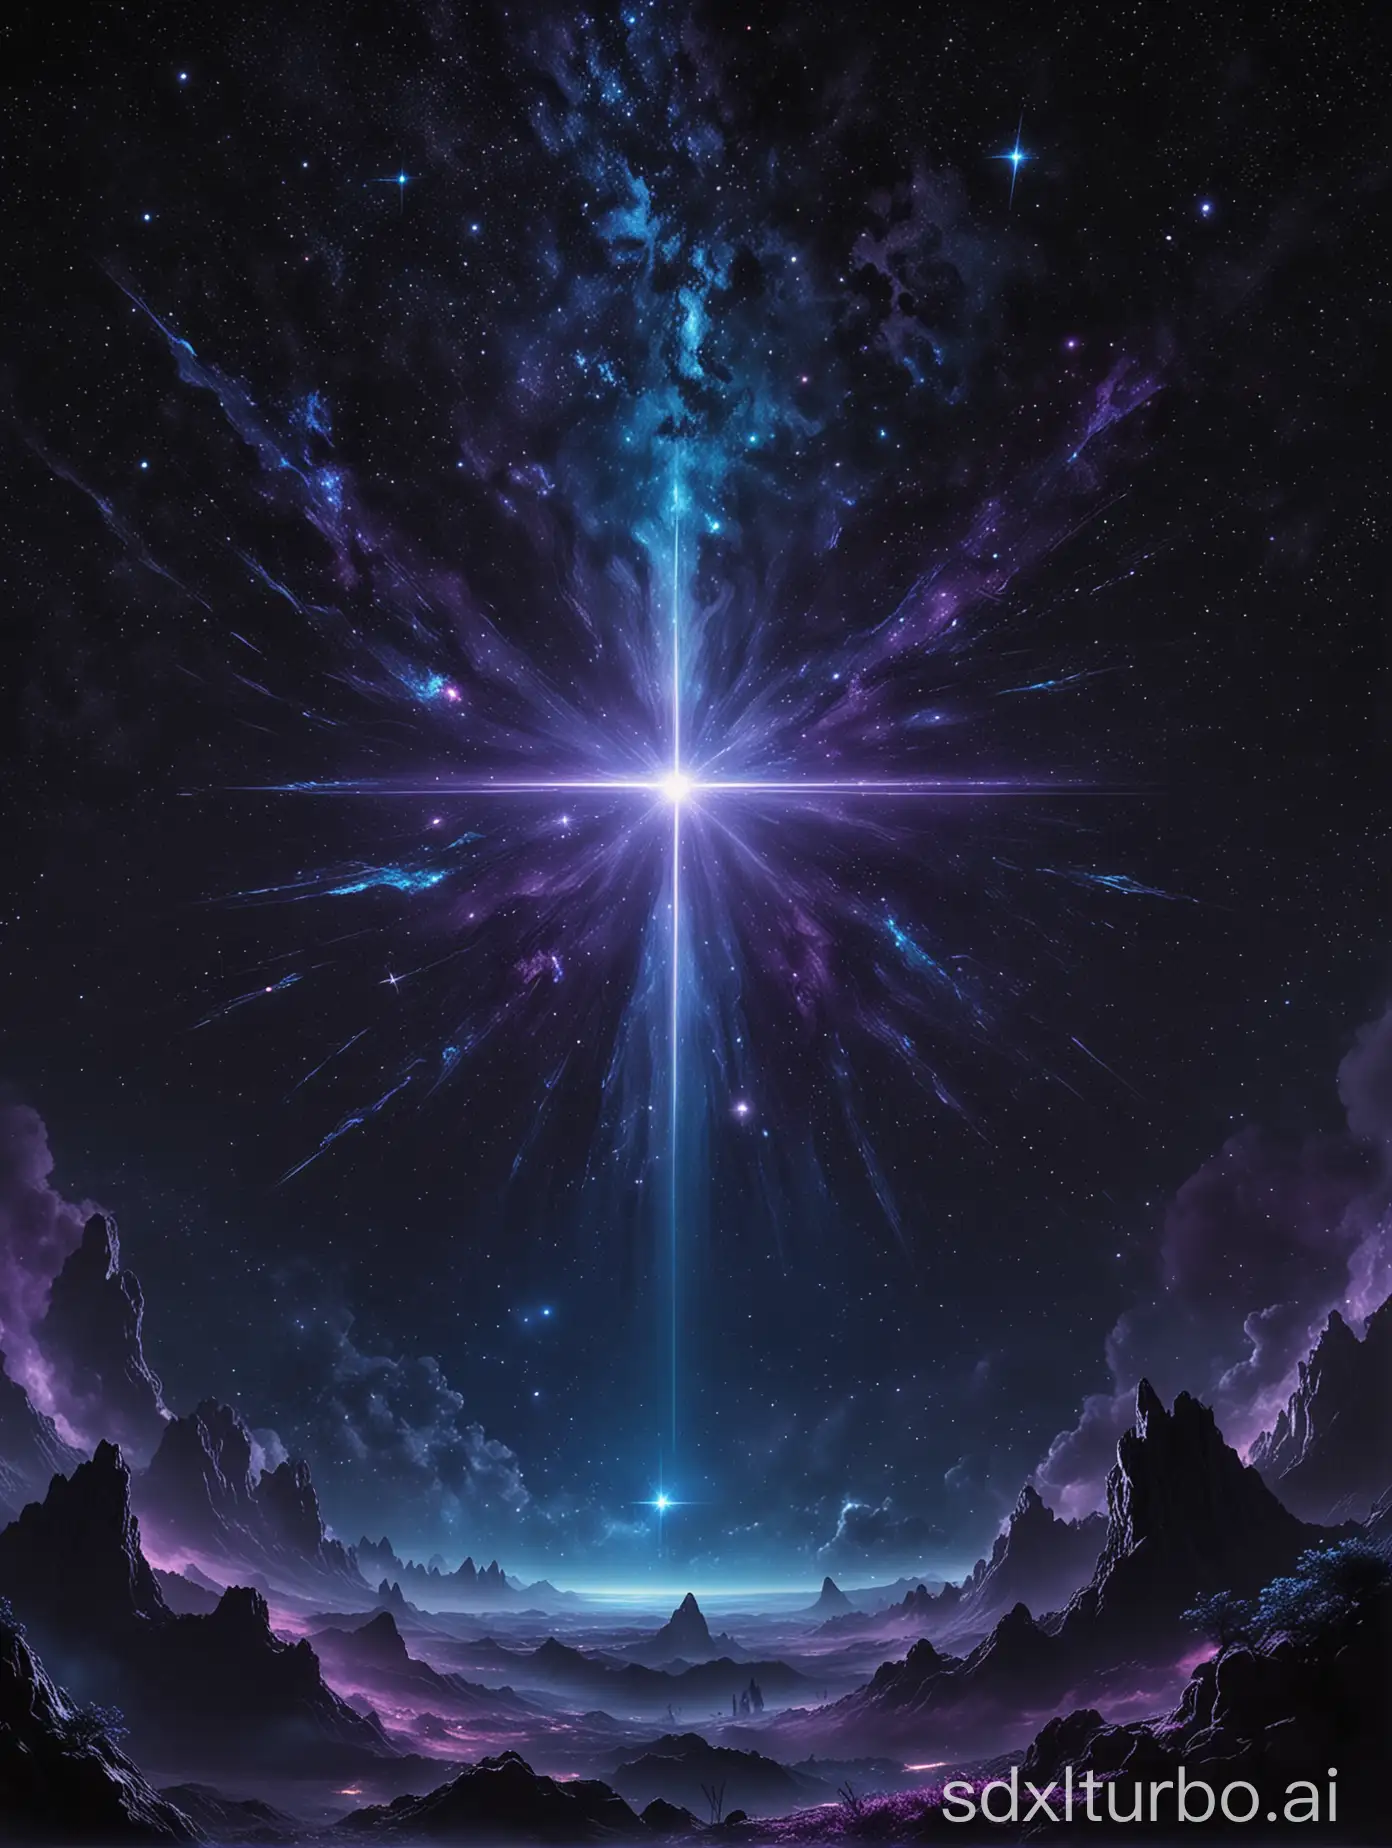 Aya-Goda-Space-Art-Mesmerizing-Galaxy-with-Bright-Purple-Star